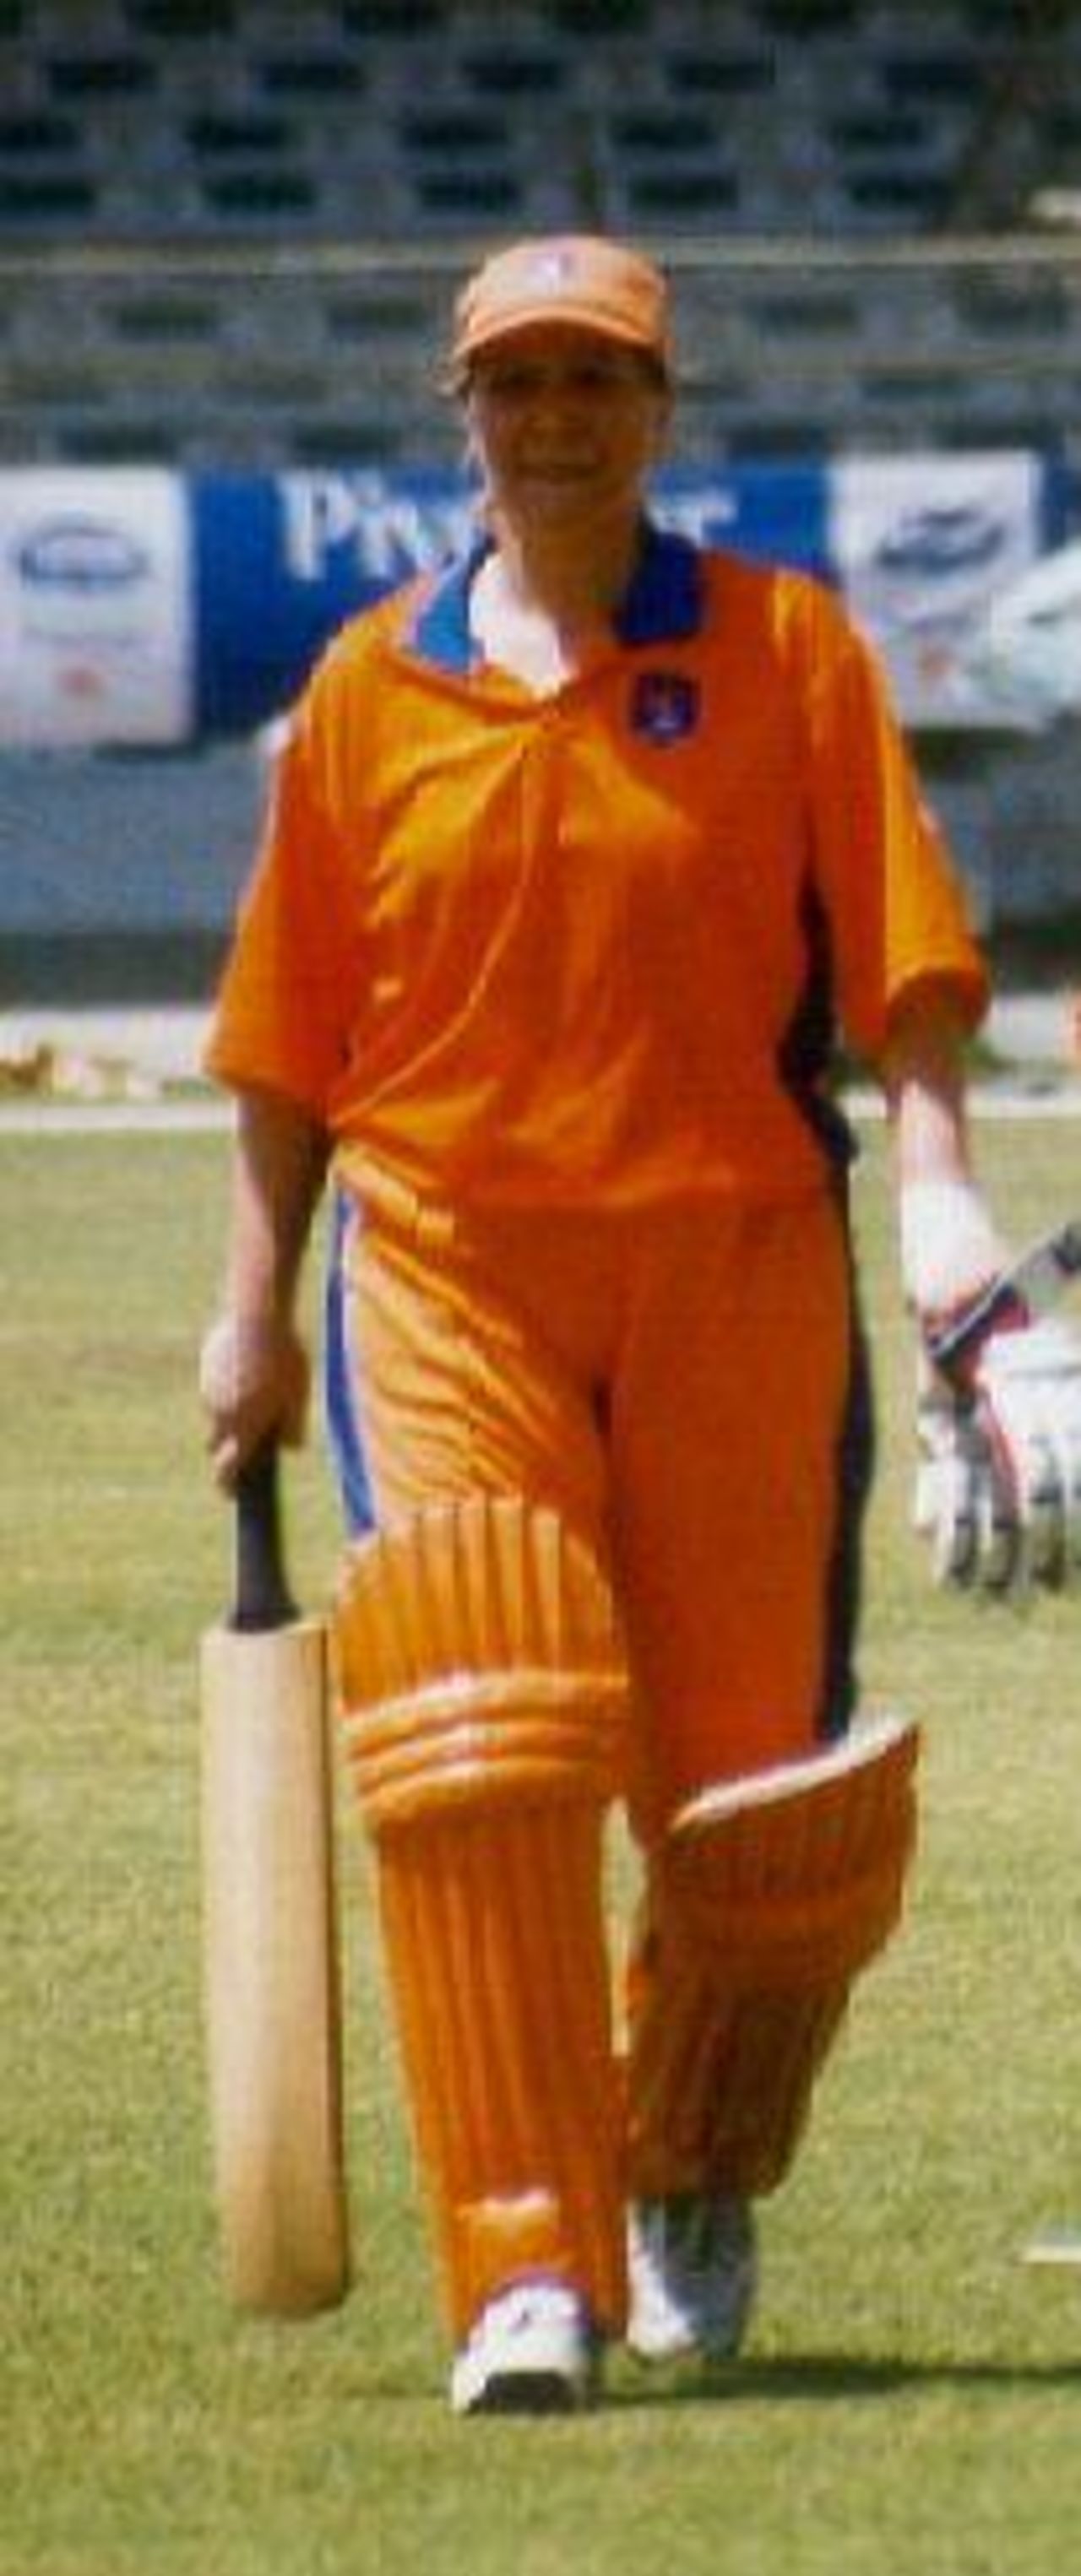 Birgit Viguurs leaving the field during a match v Pakistan, April 2001